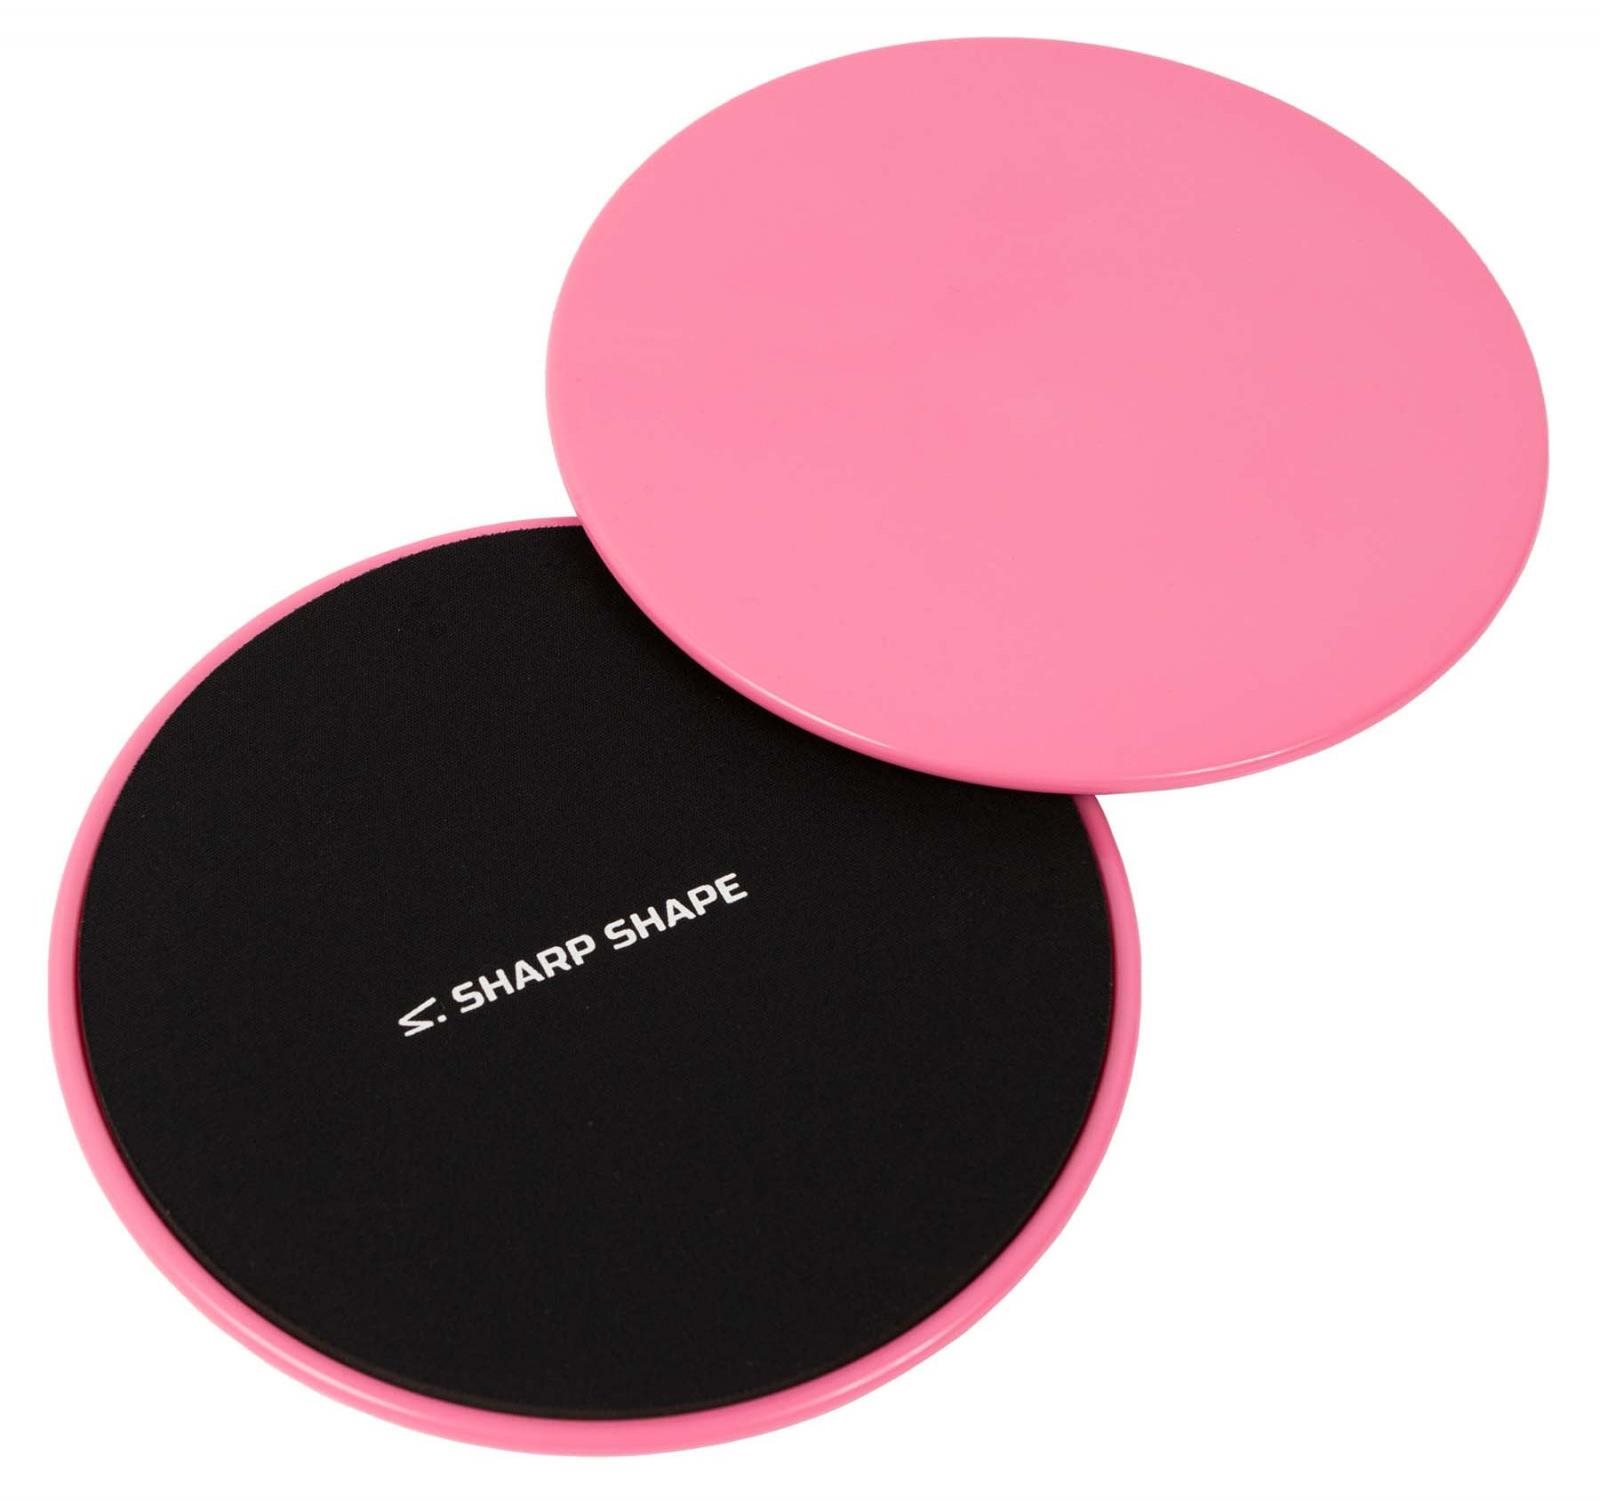 Sharp Shape Core sliders pink